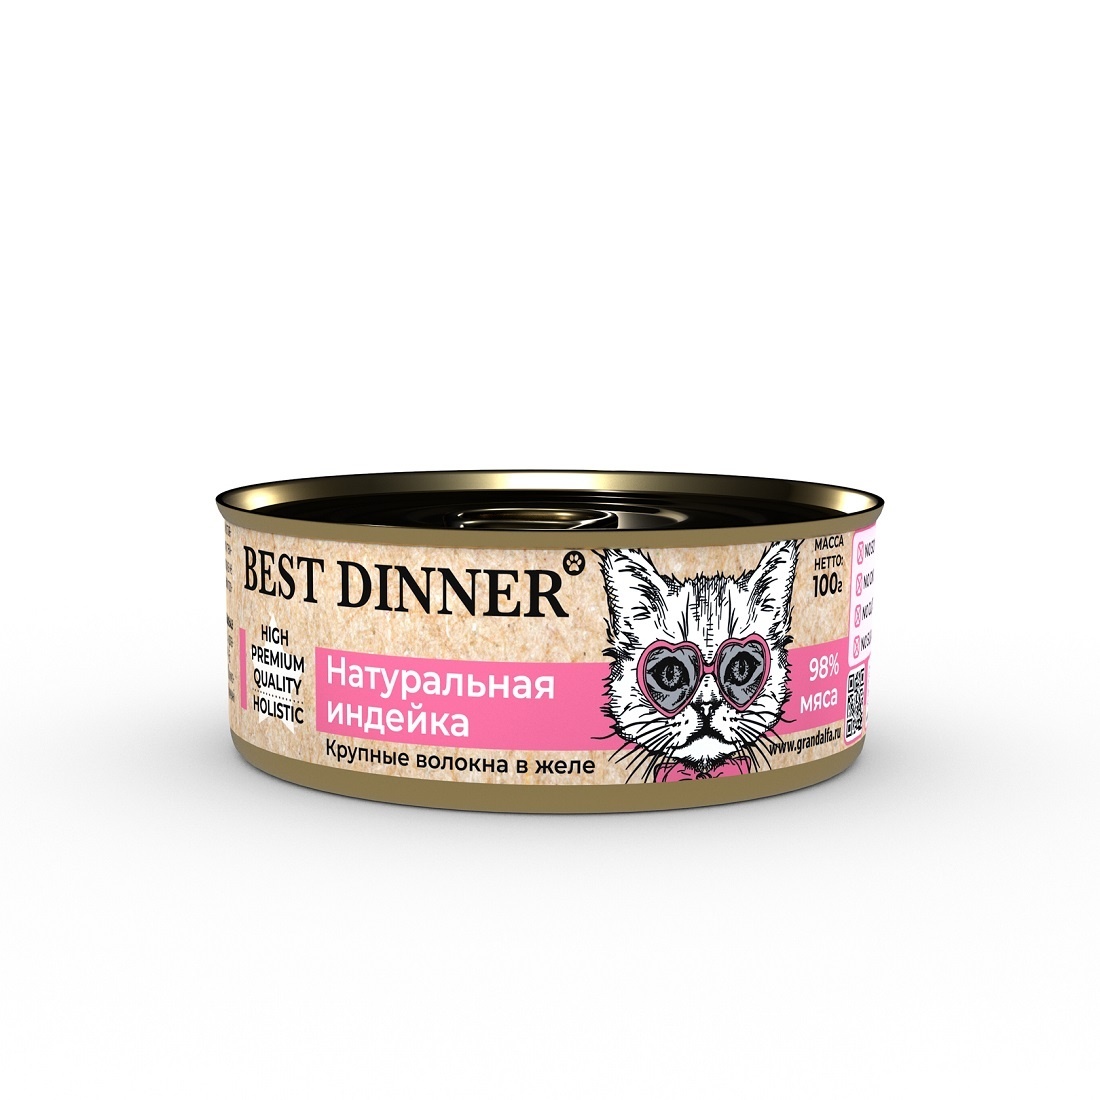 Best Dinner Best Dinner консервы для кошек в желе Натуральная индейка (100 г)